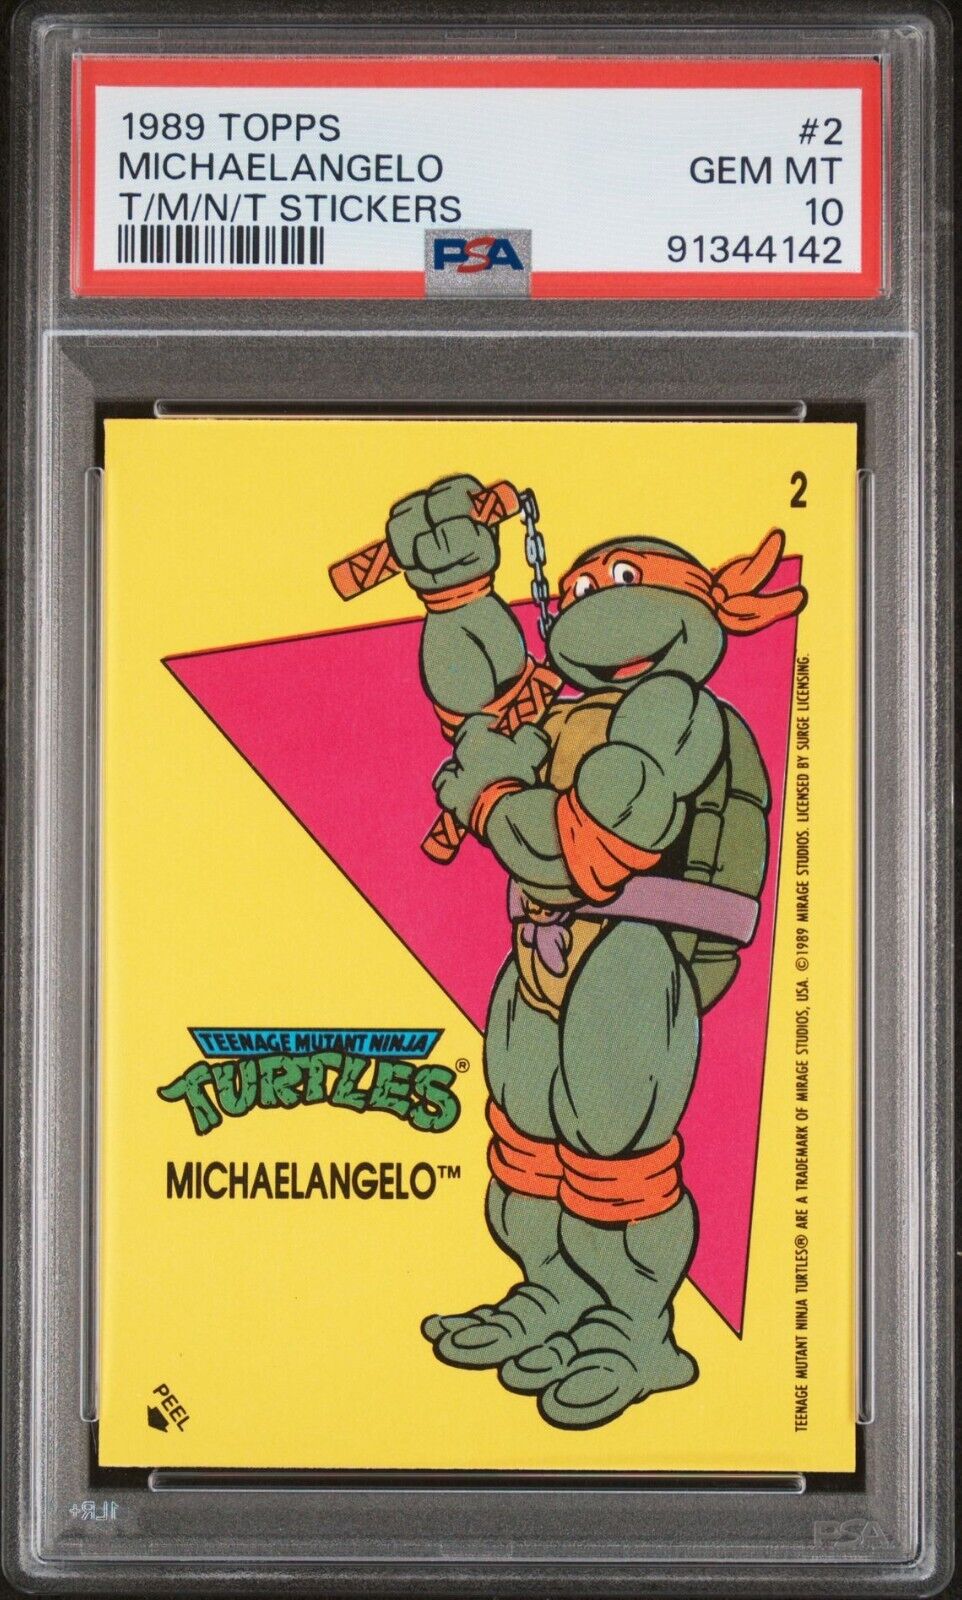 1989 Topps TMNT Ninja Turtles #2 Michaelangelo Sticker Card PSA 10